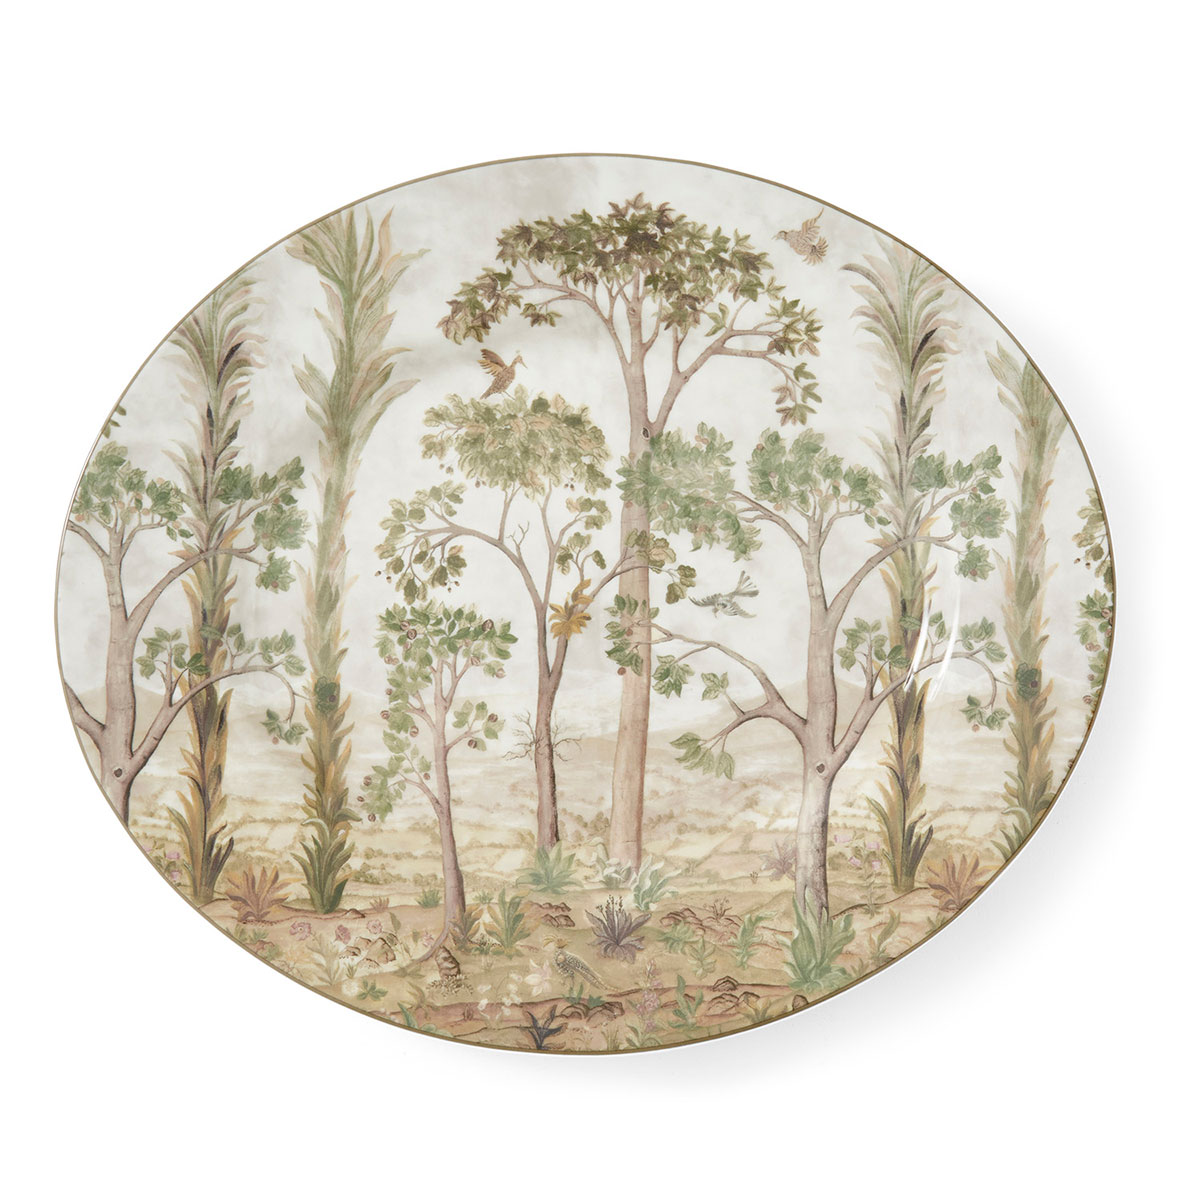 Kit Kemp, Spode Tall Trees 14" Oval Platter